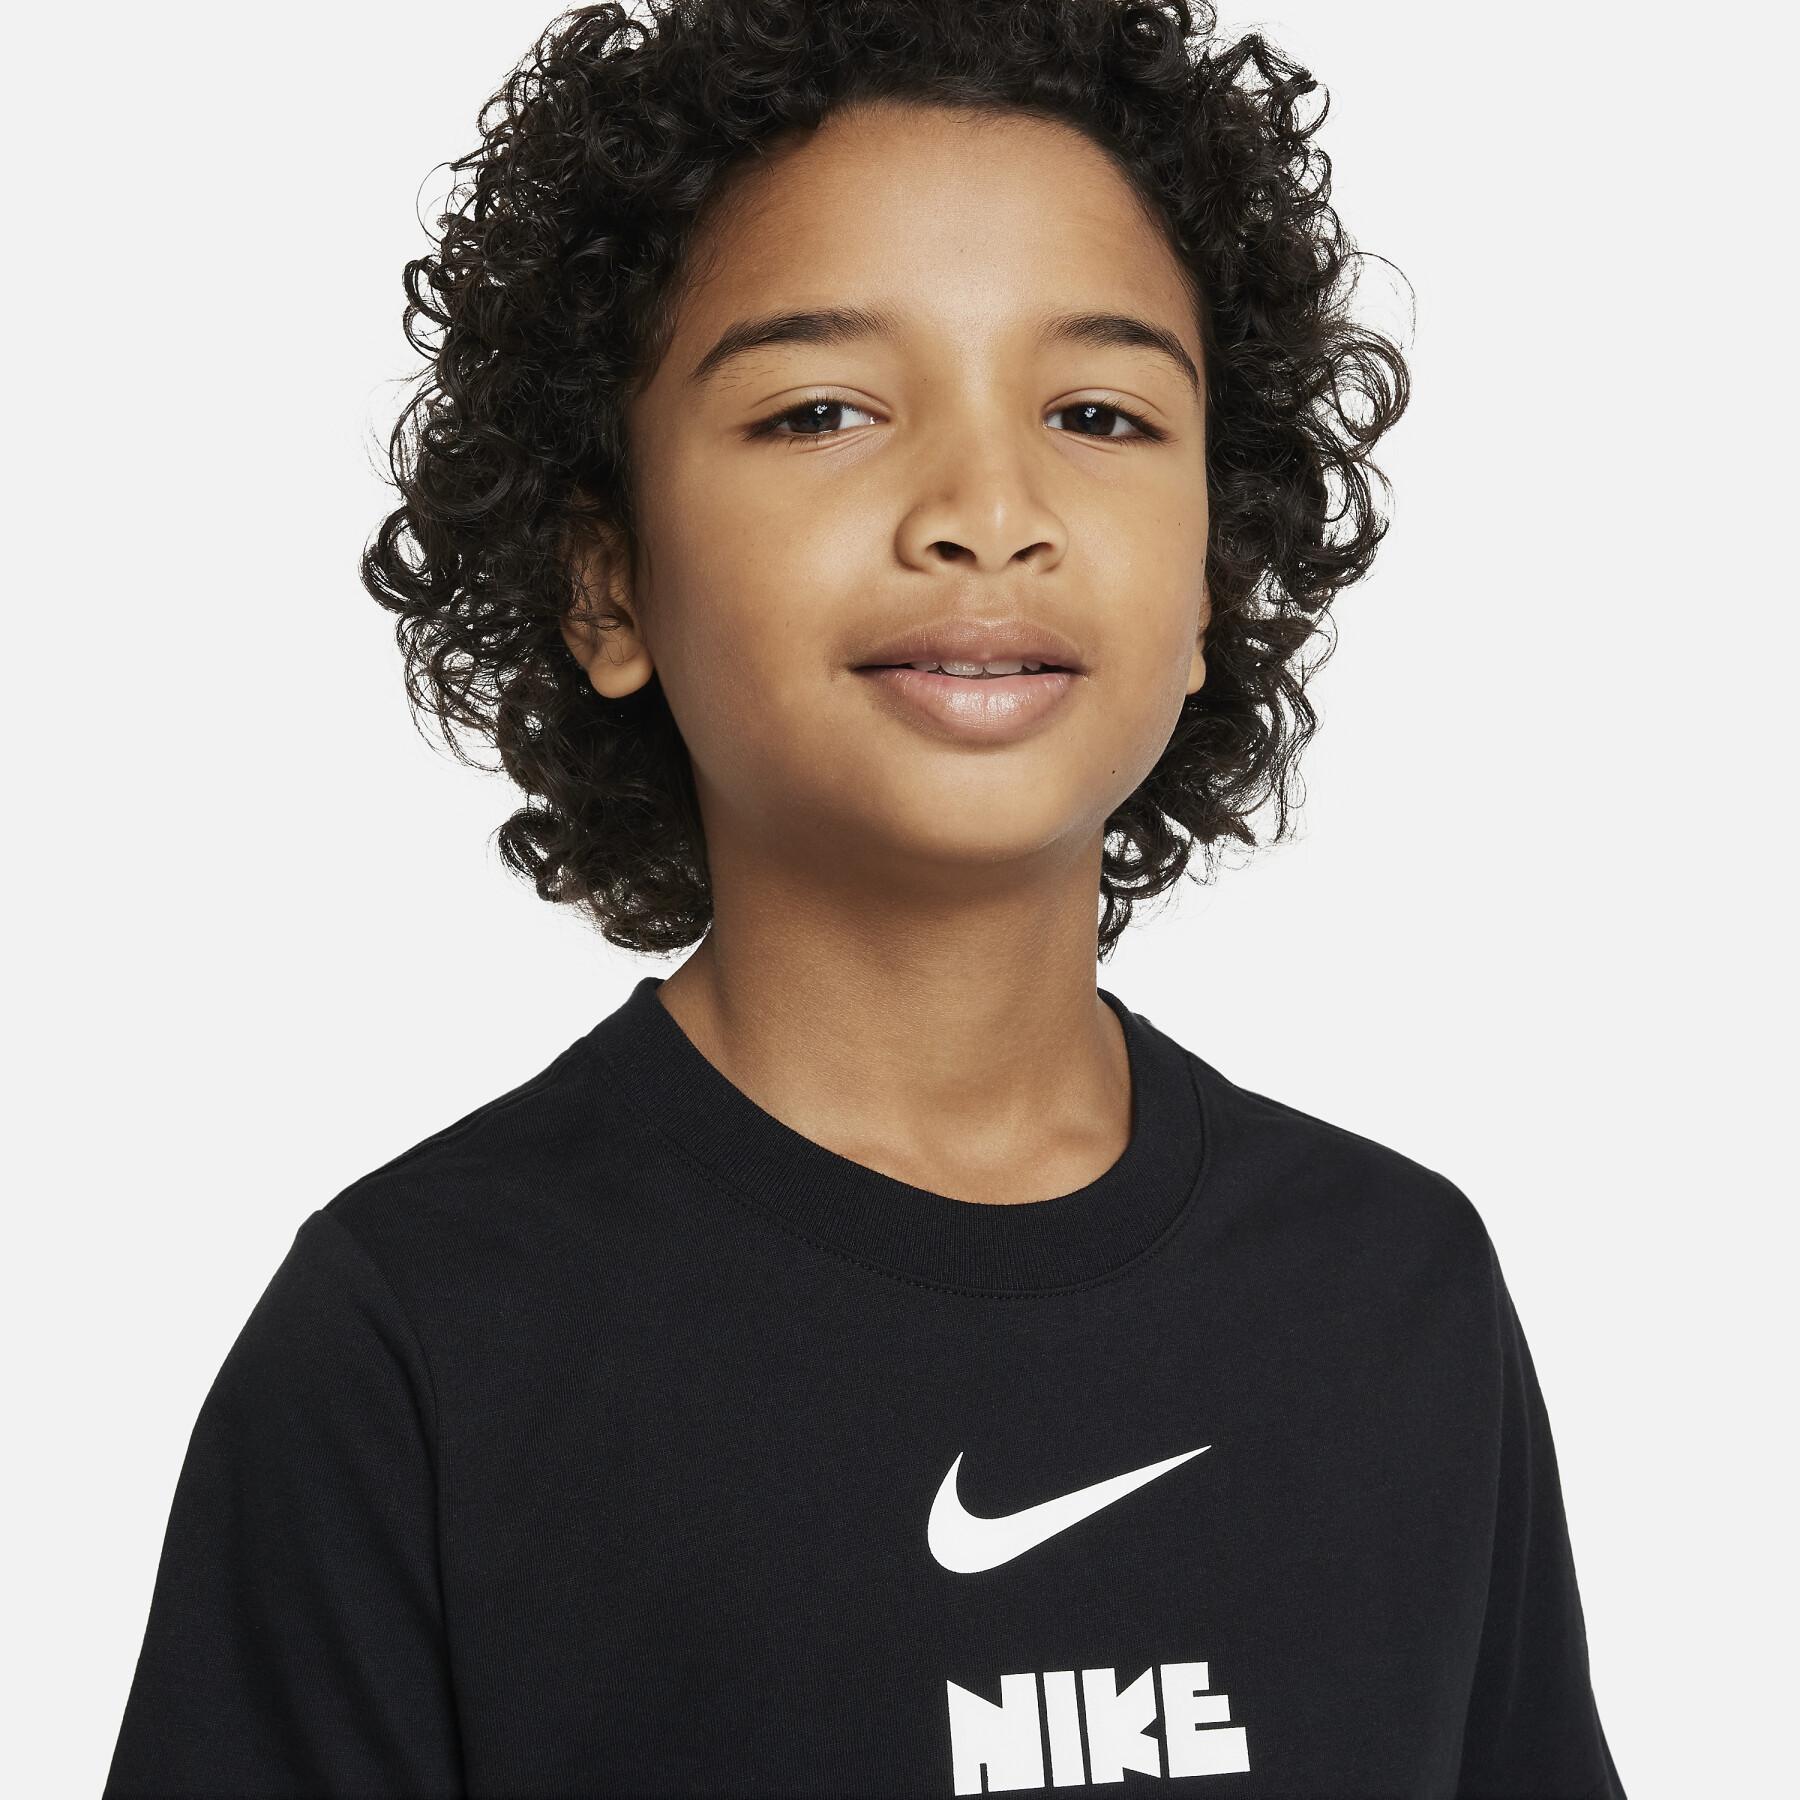 Camiseta infantil Nike Logo